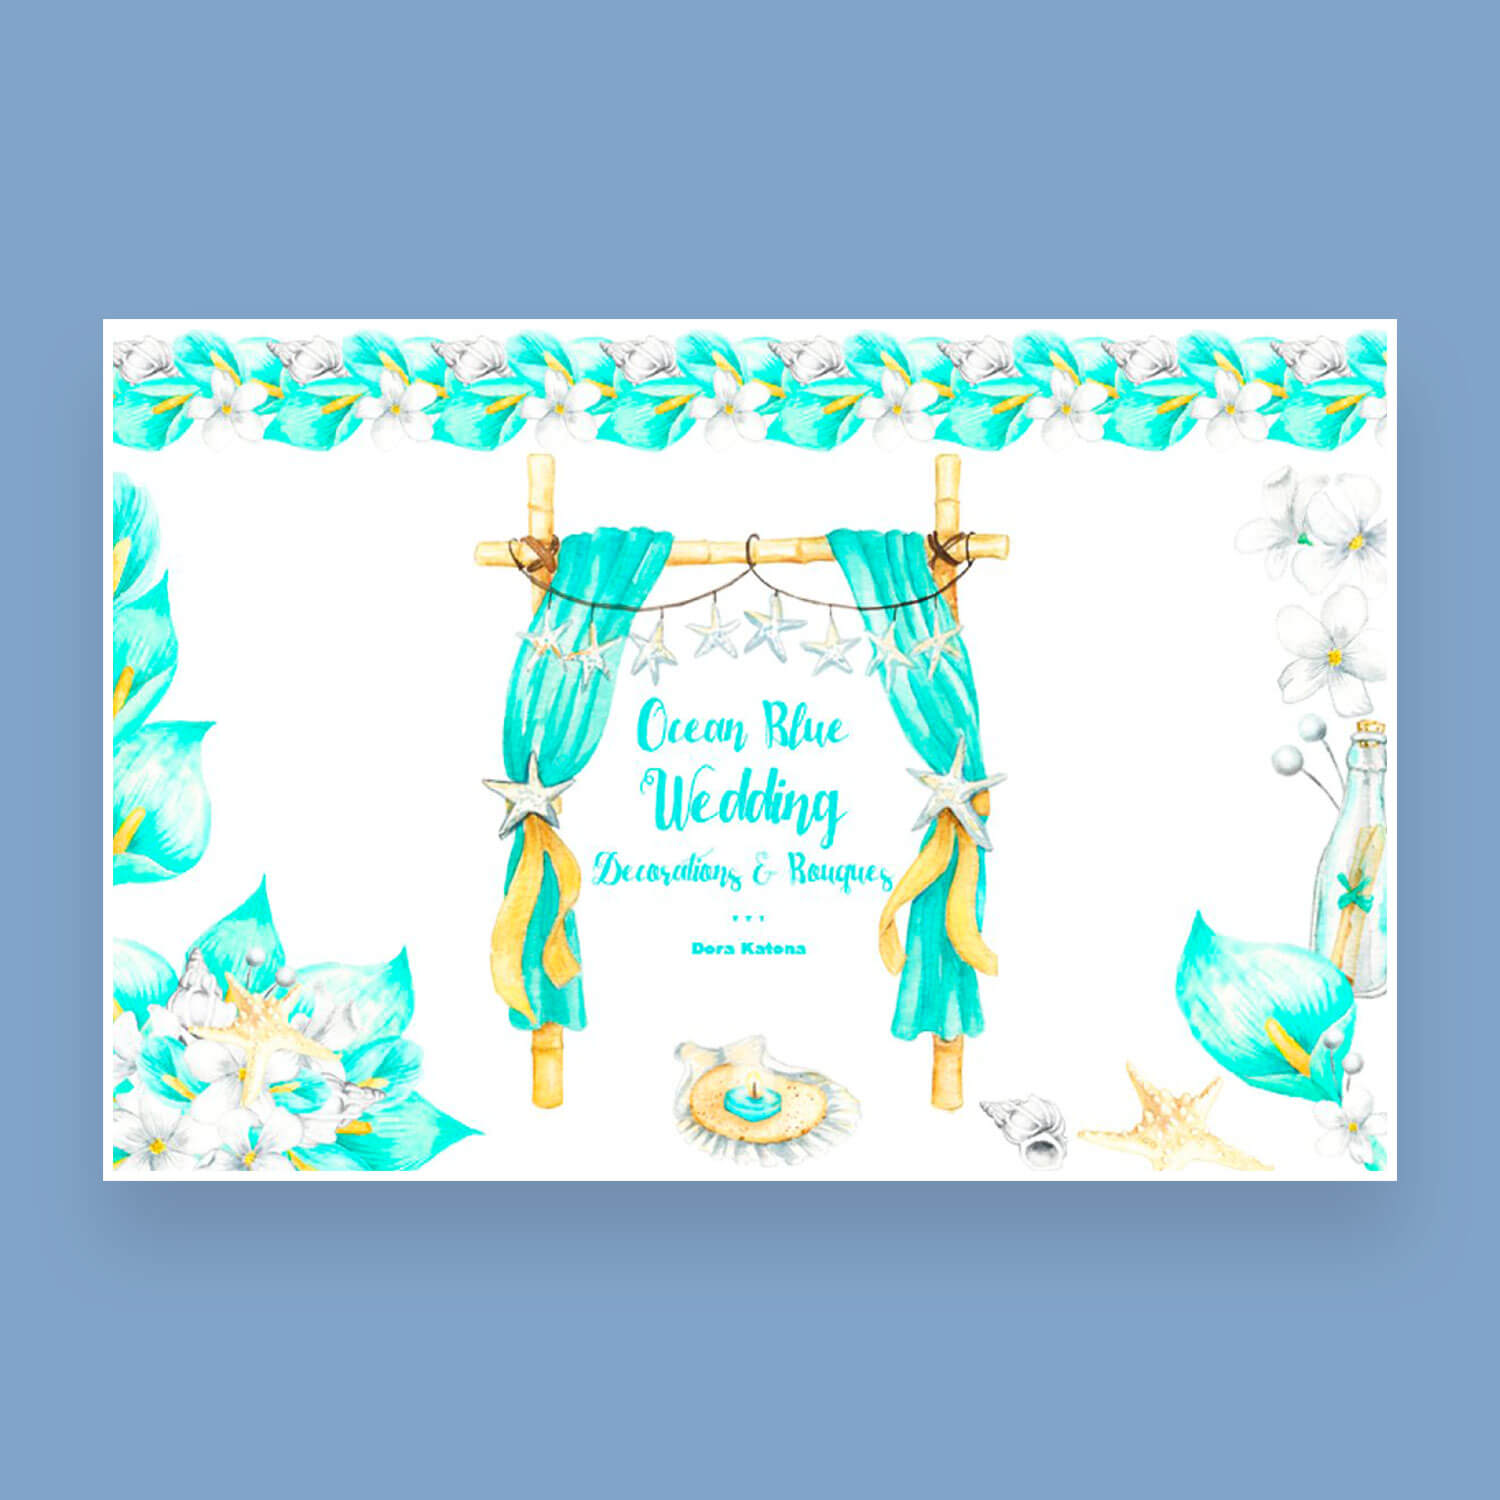 Wedding flowers color scheme - ocean blue clipart images on a blue background.